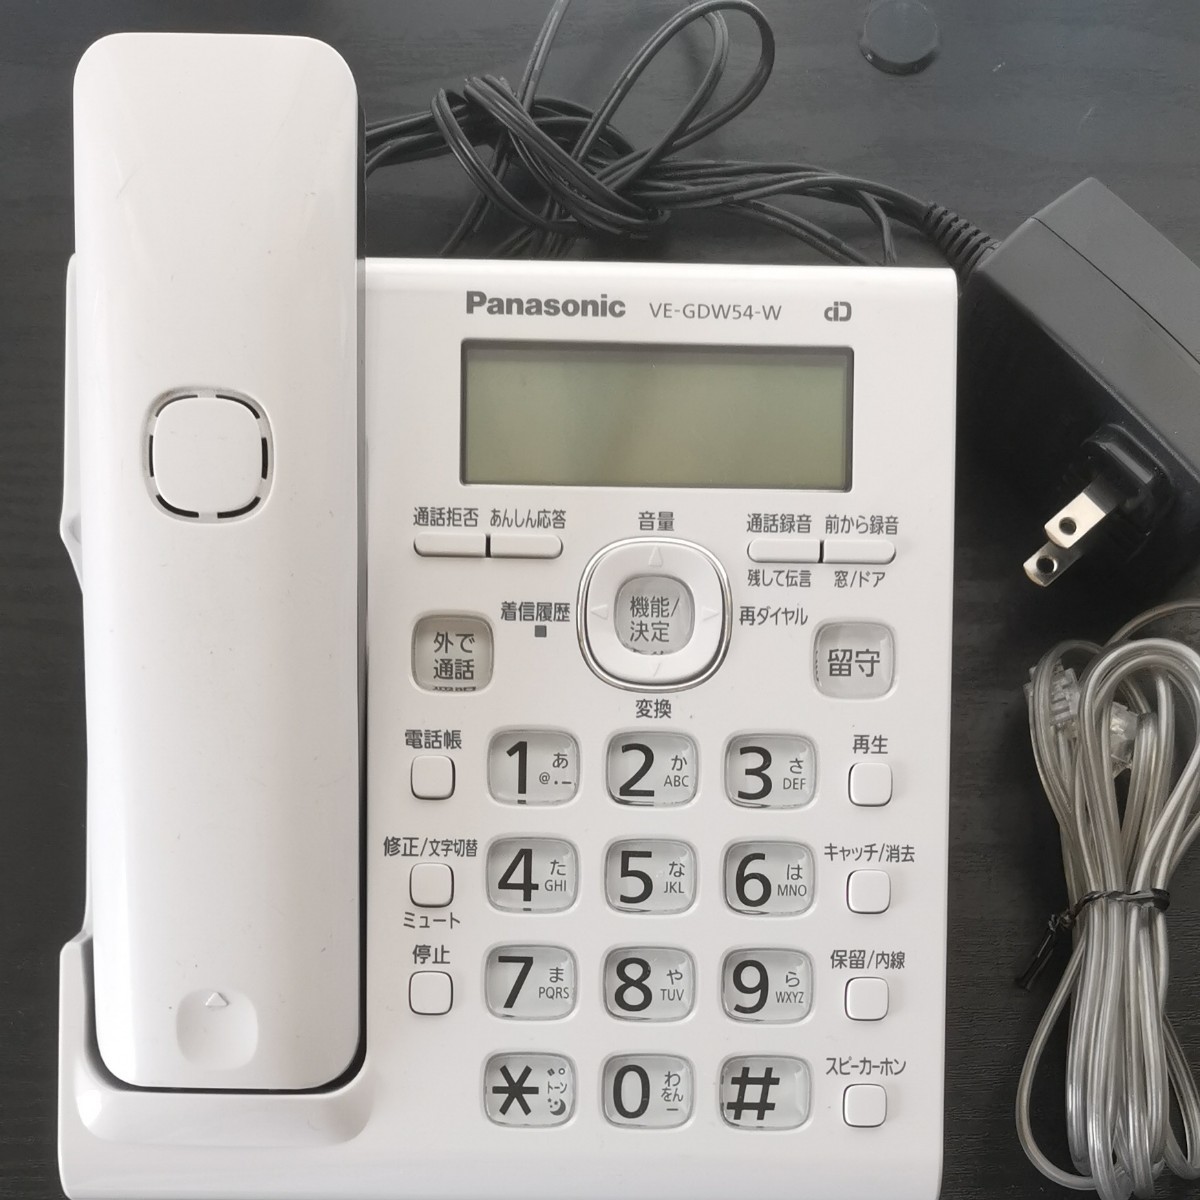 ve-gdw54-w　 Panasonic パナソニック コードレス電話機 VE-GDW54D